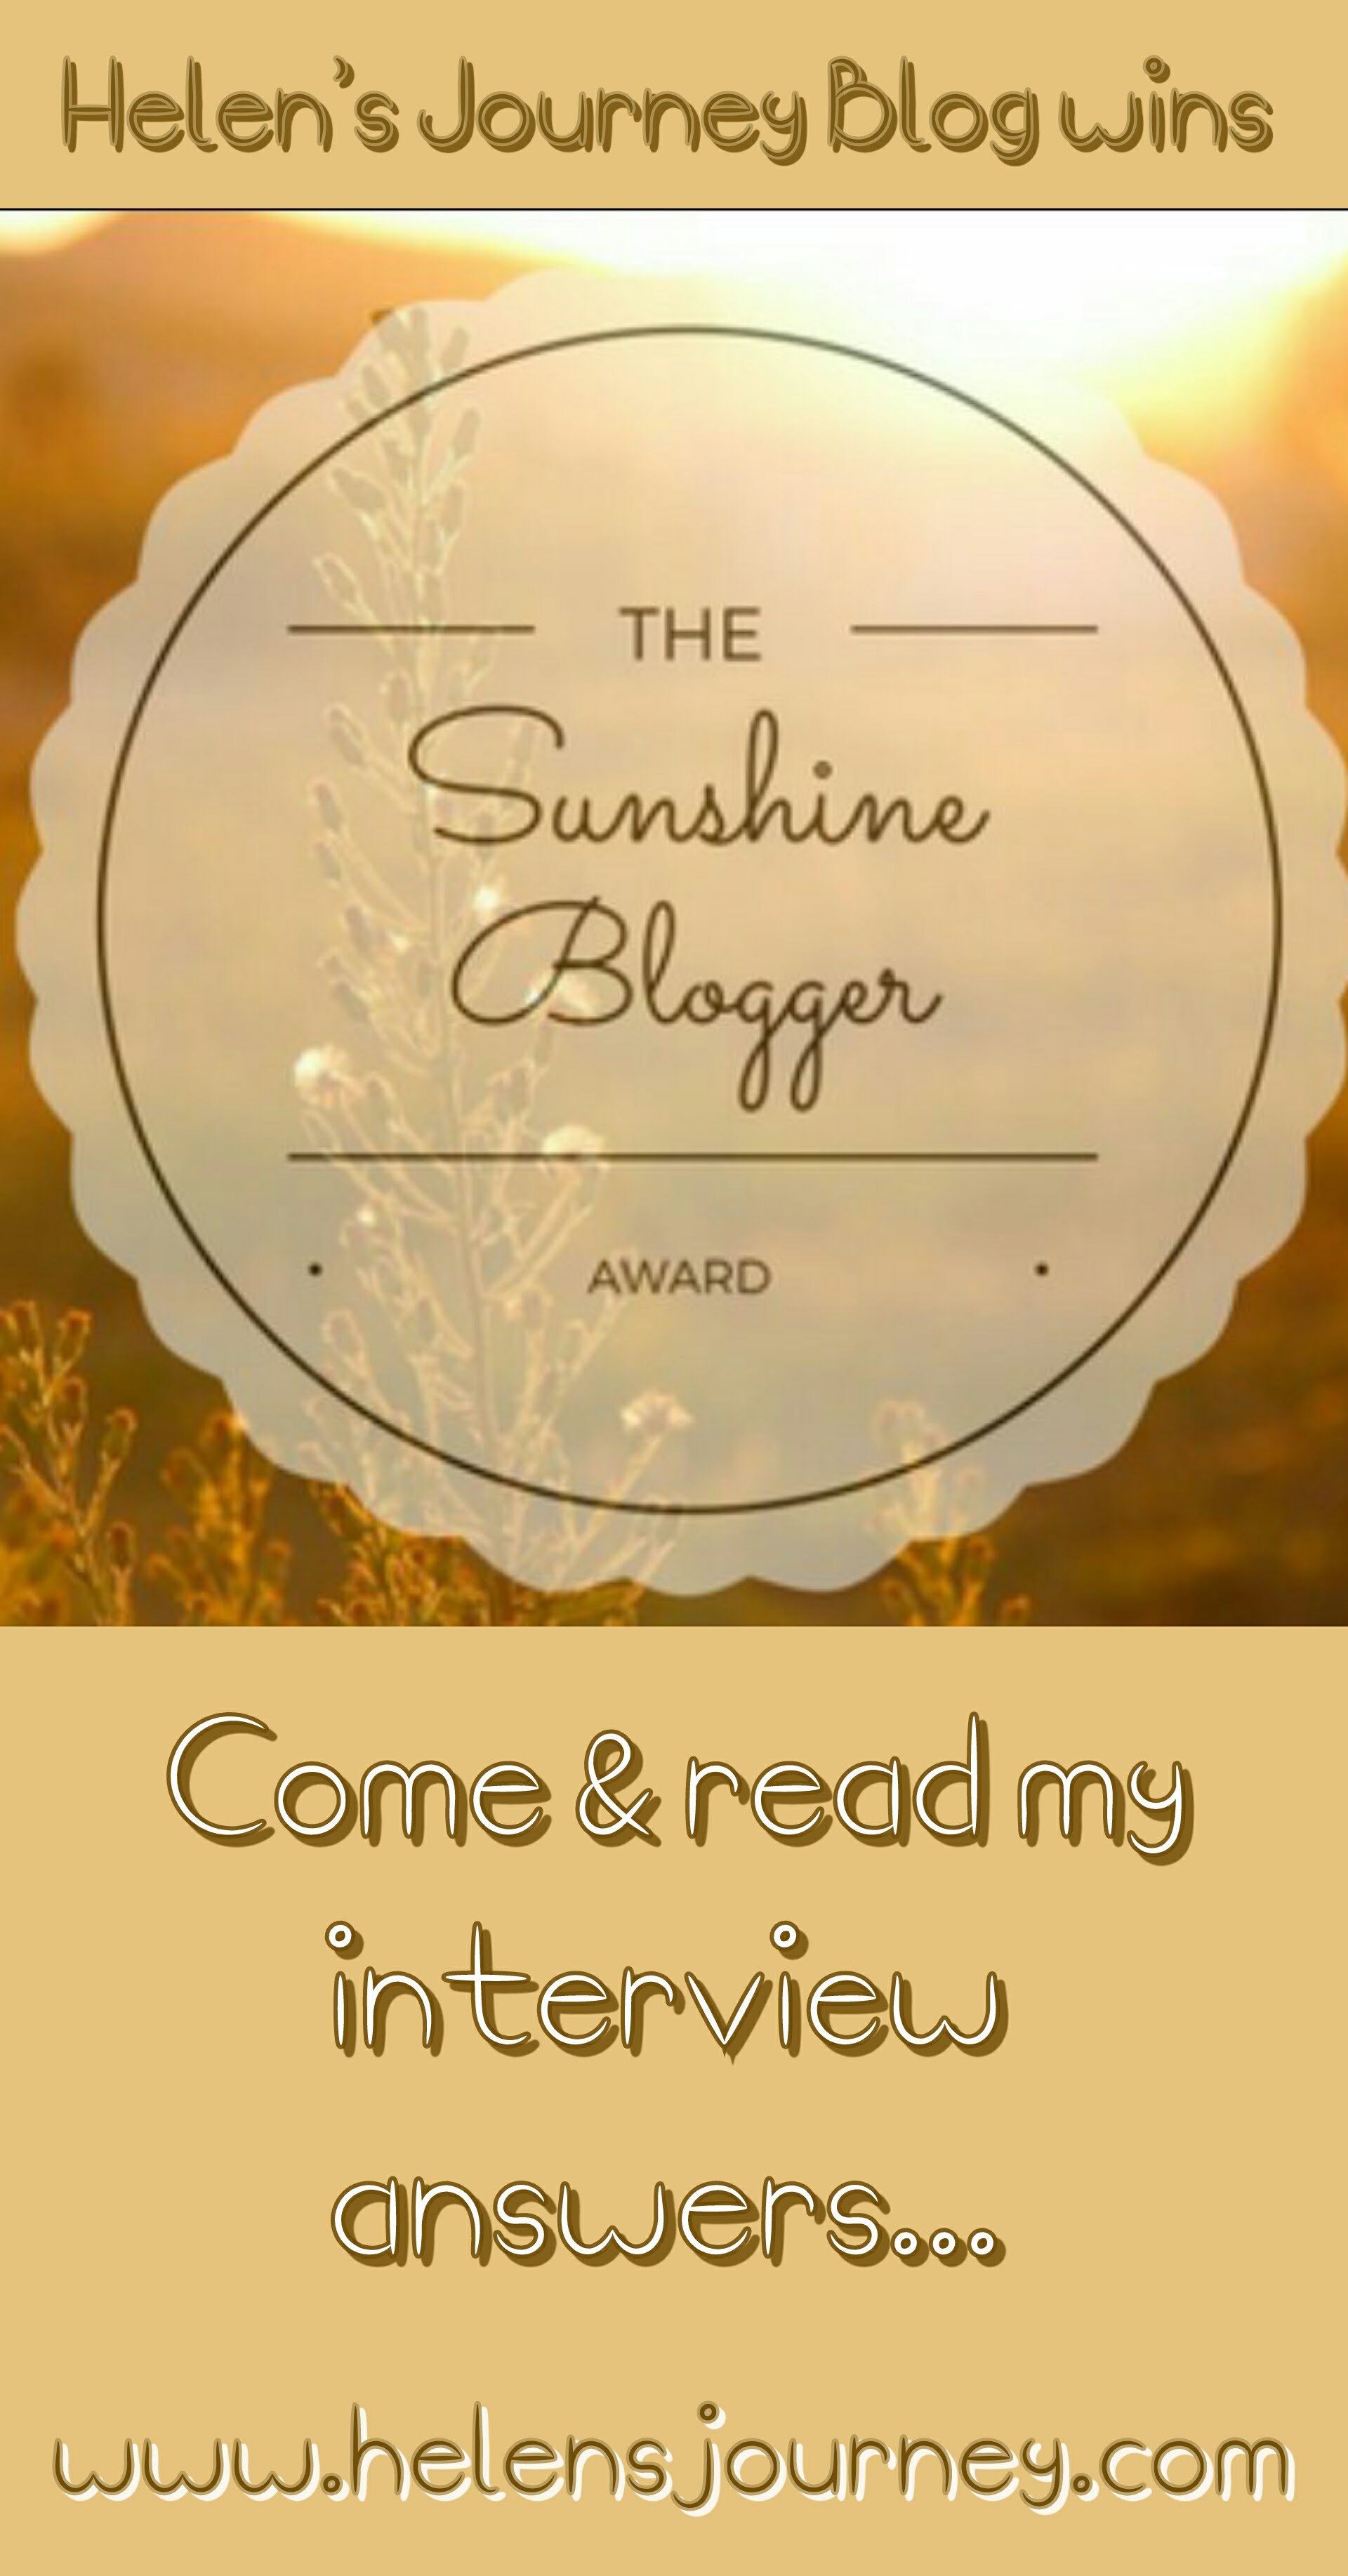 helens journey blog wins sunshine blogger award. Award logo & invite to read interview answers